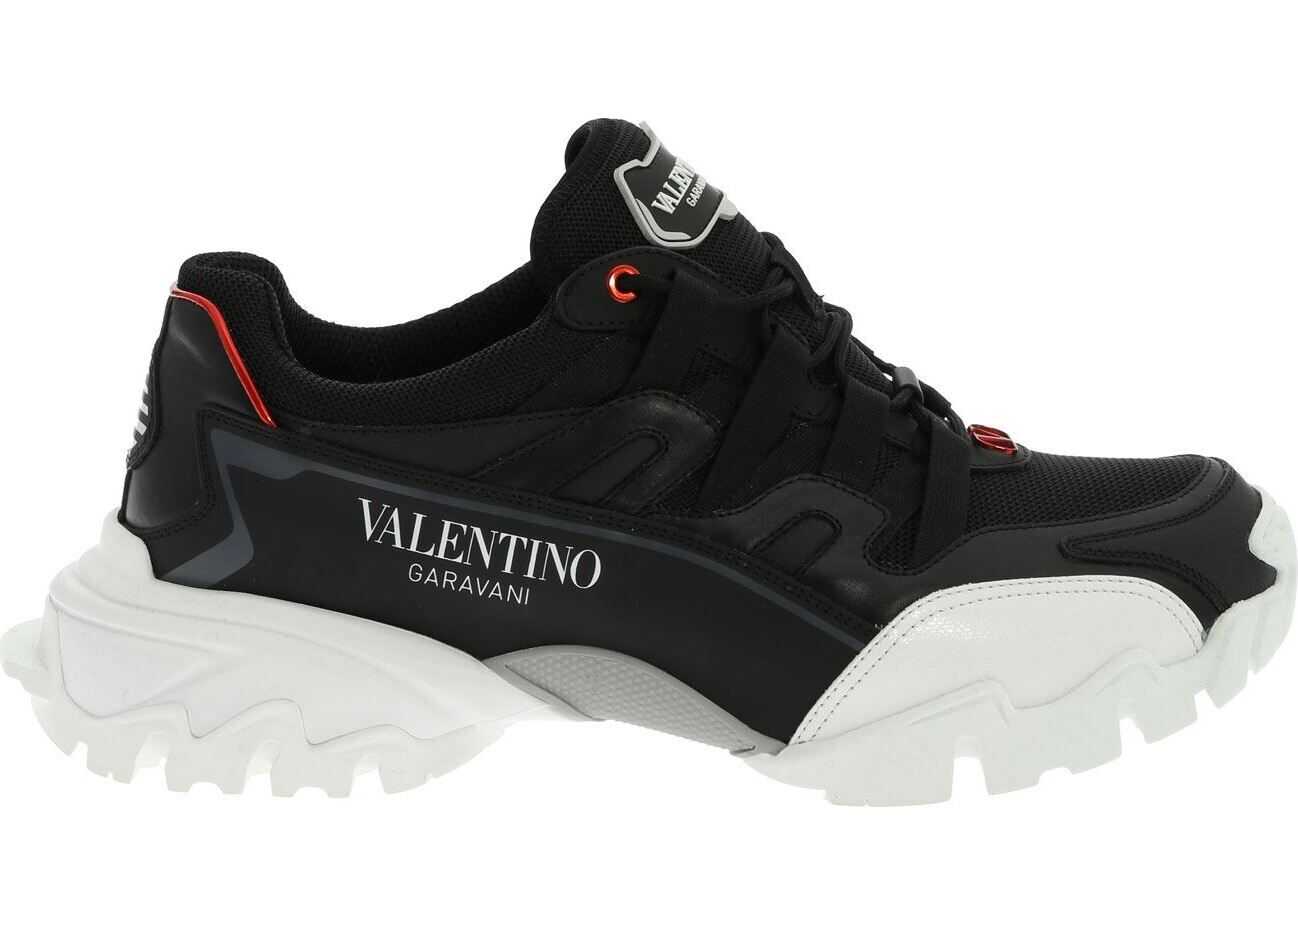 Valentino Garavani Climbers Sneakers In Black Black